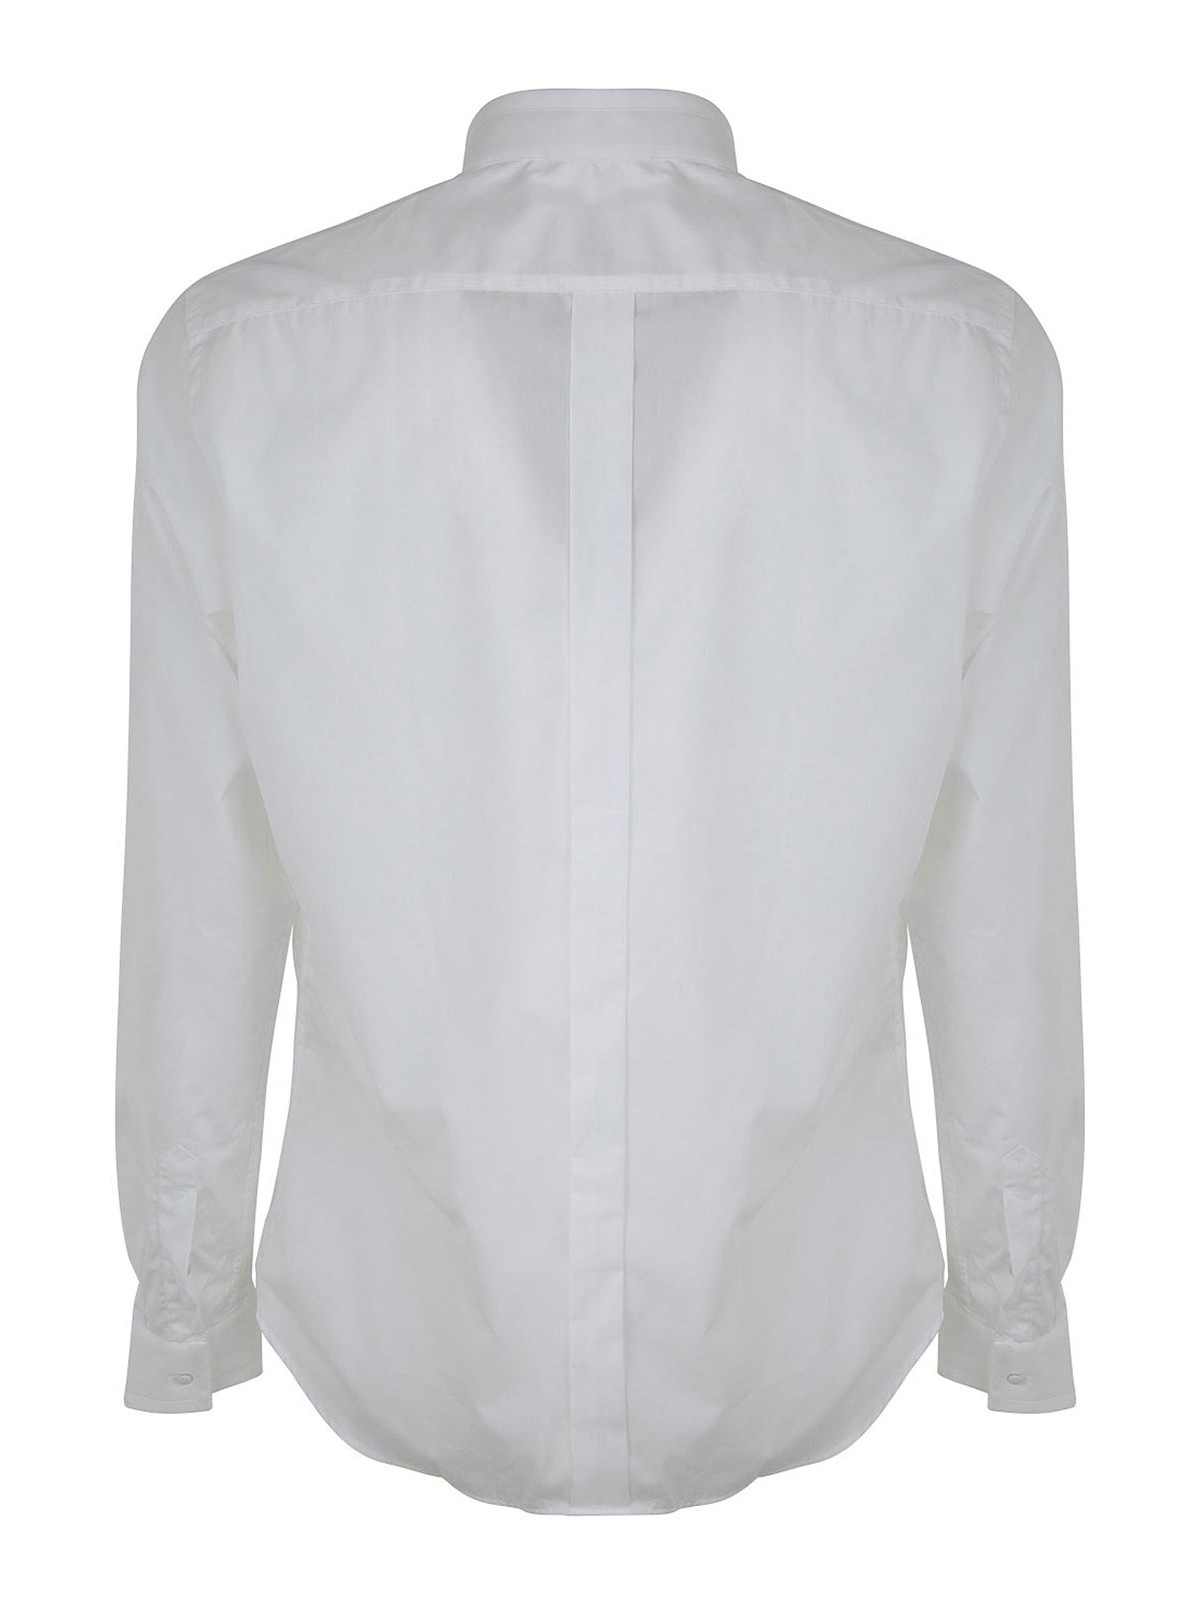 Shop Dnl Camisa - Blanco In White